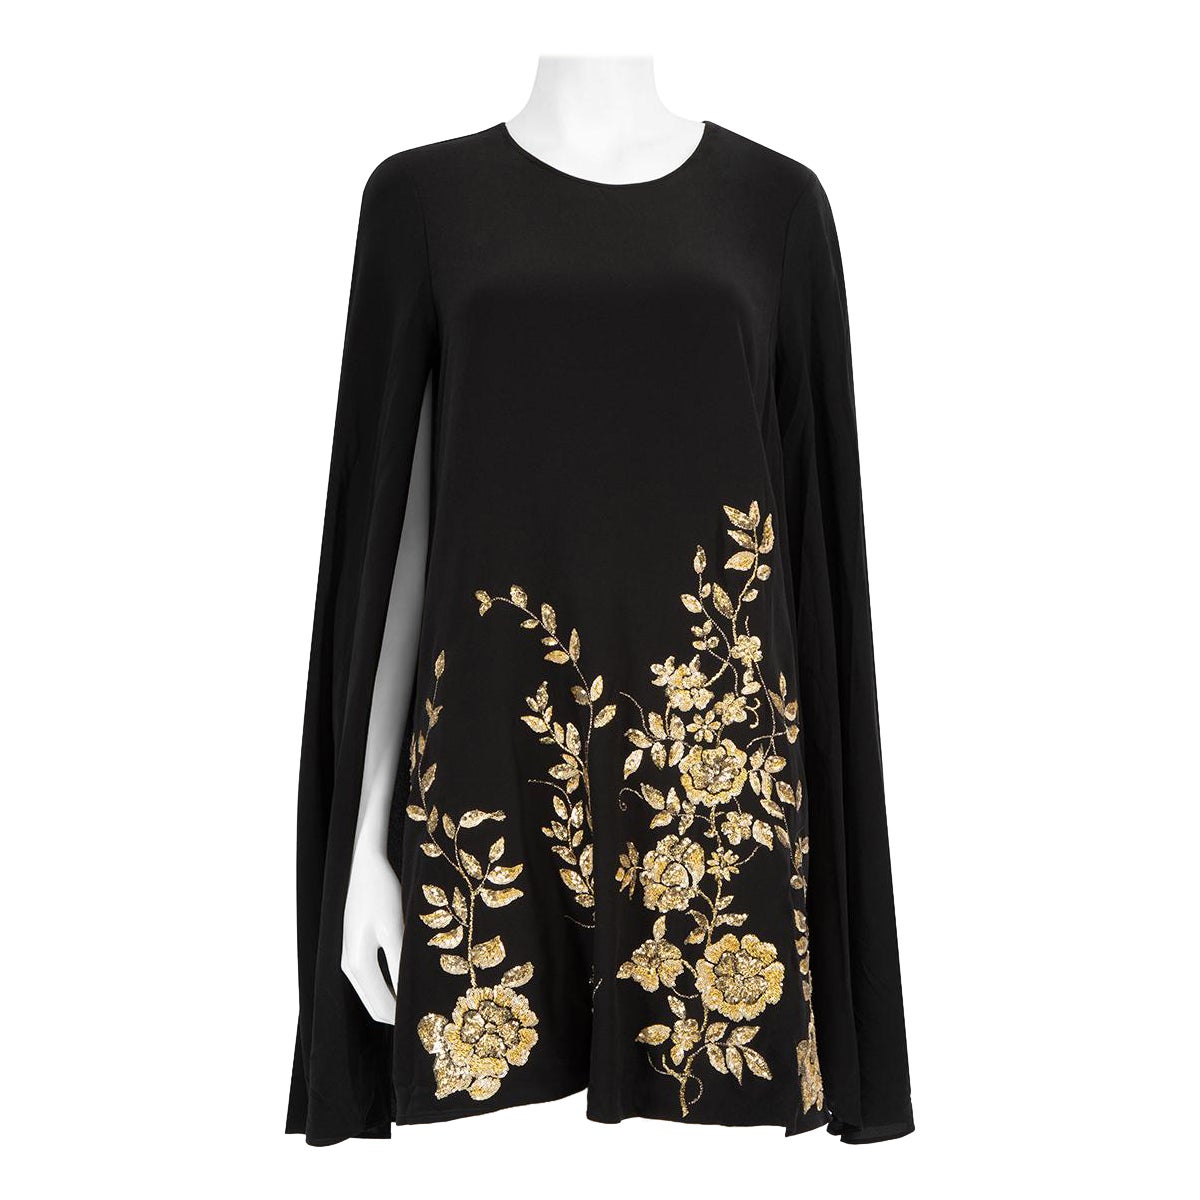 Etro Black Silk Embellished Cape Mini Dress Size M